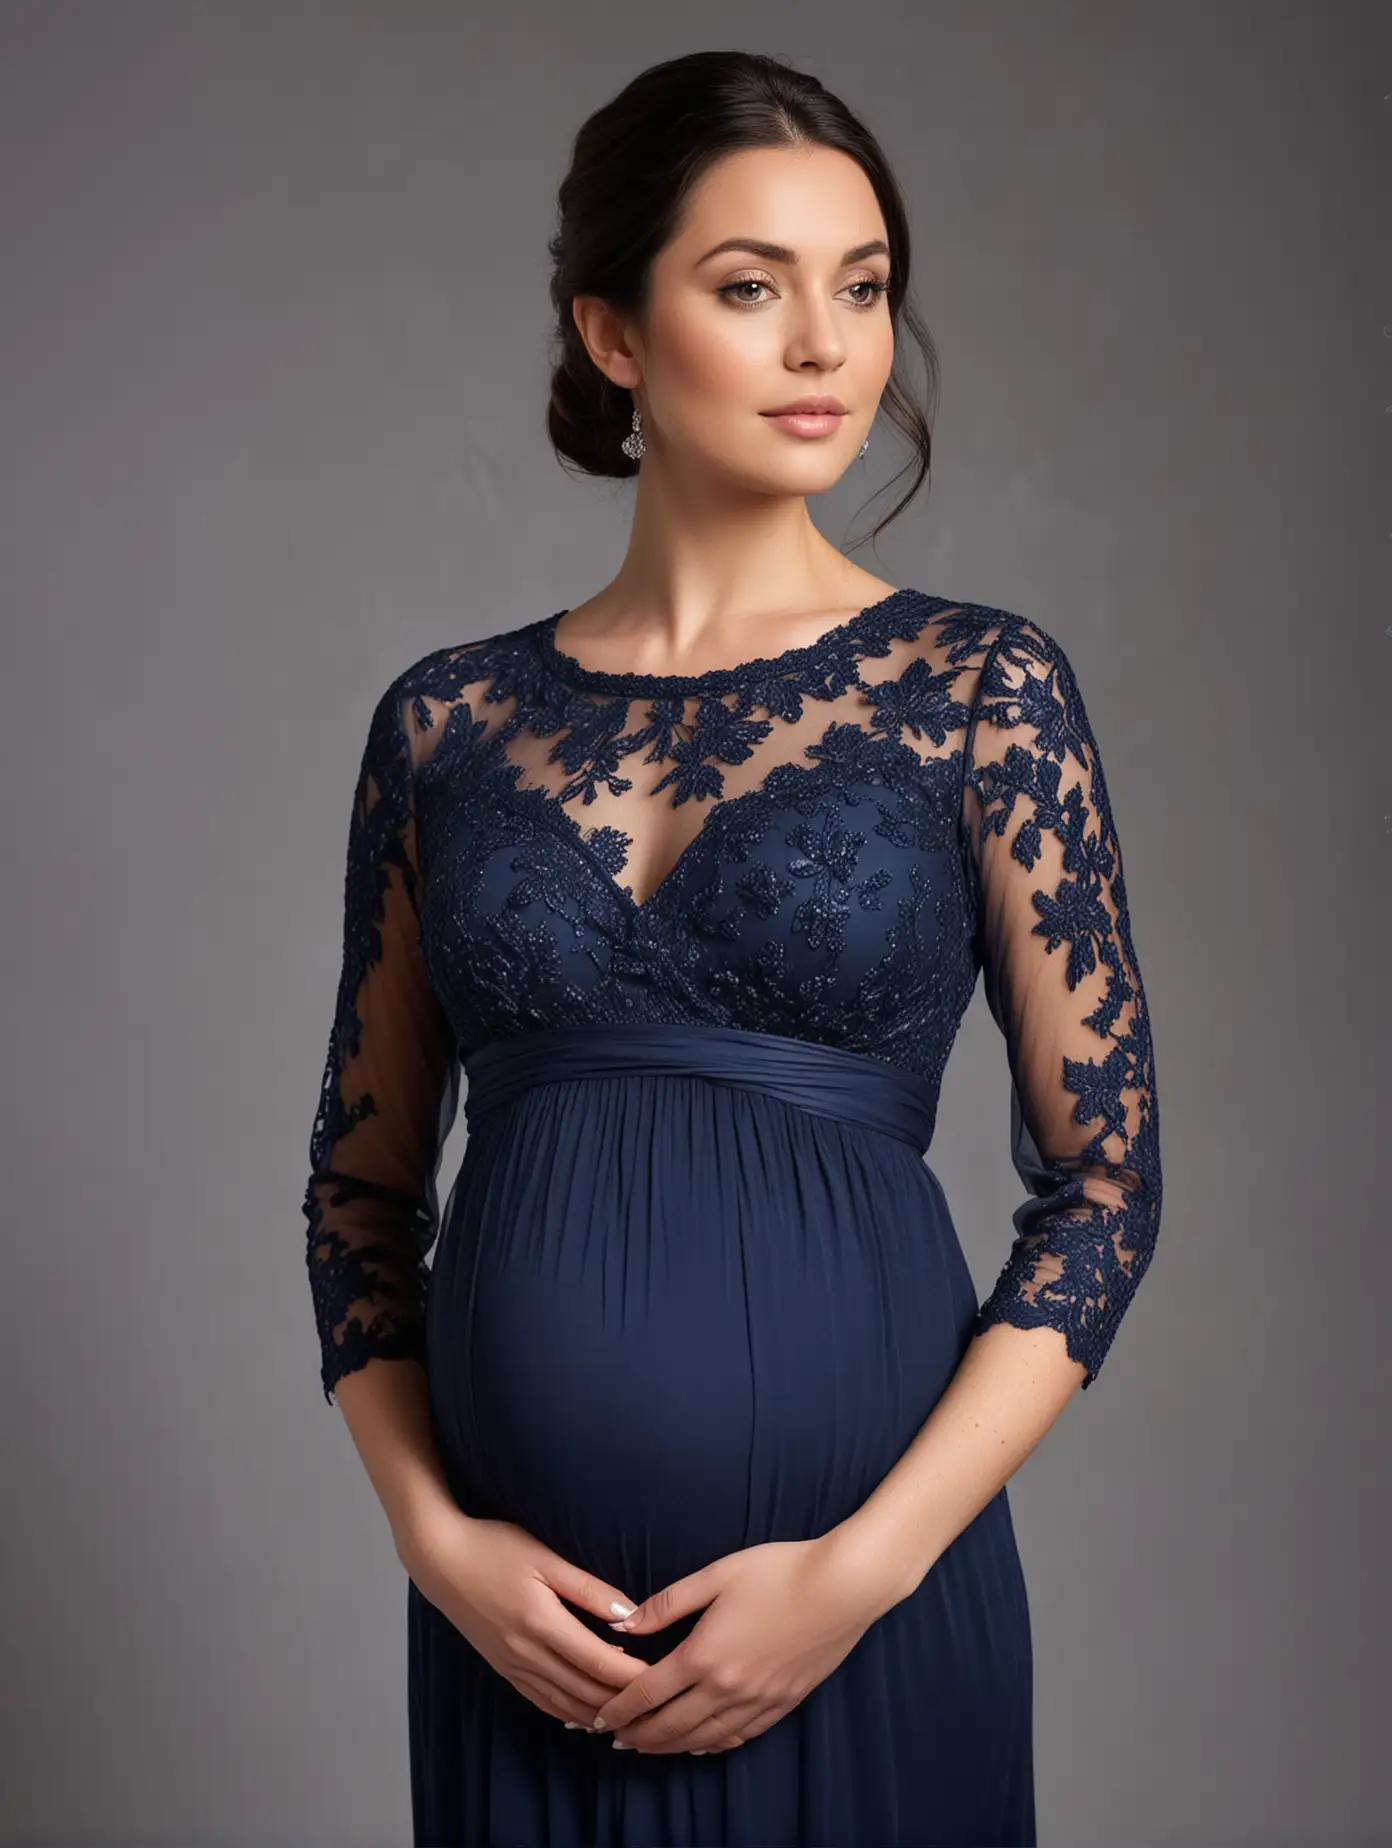 Elegant Pregnant Woman in Navy Blue Evening Dress Maternity Photoshoot Beauty